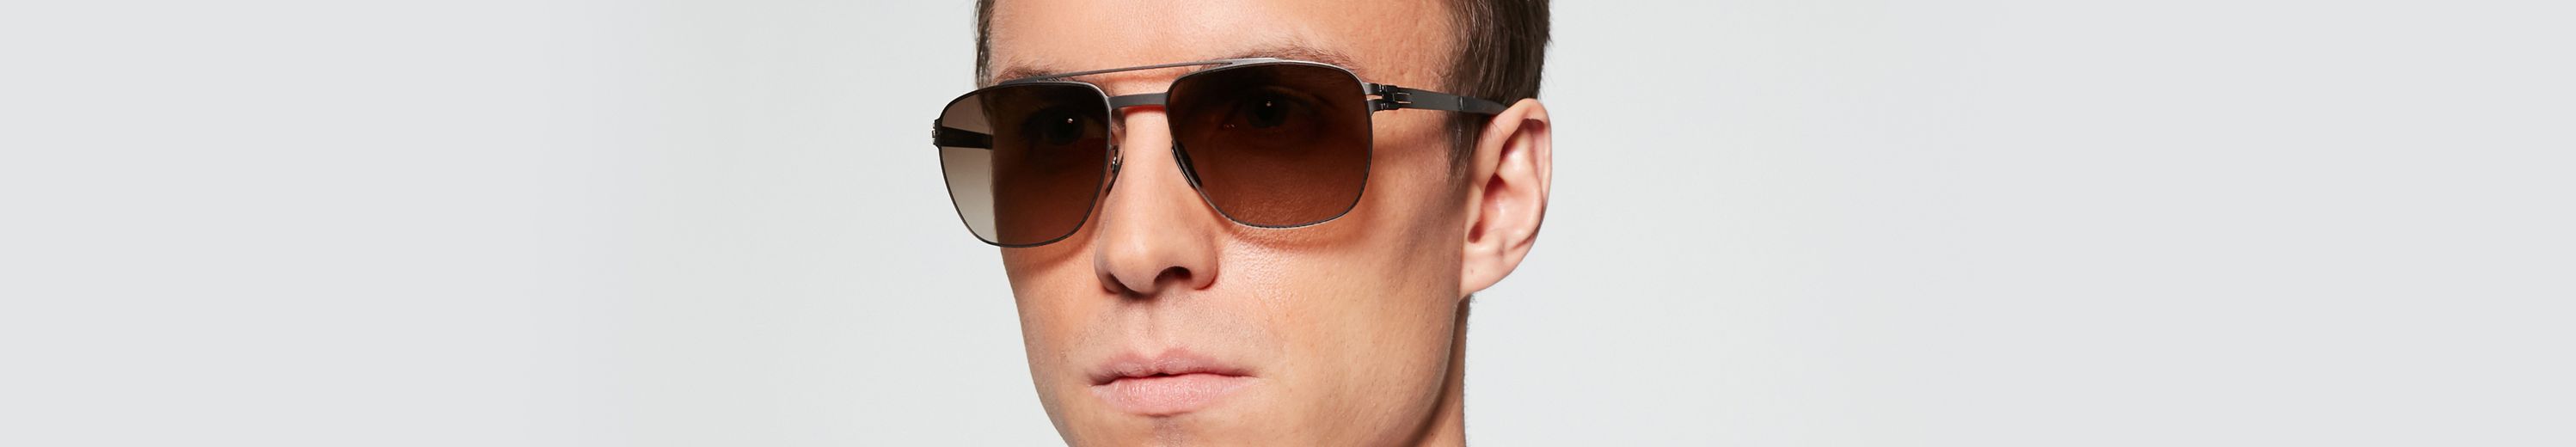 Titanium Sunglasses Frame for Men & Women